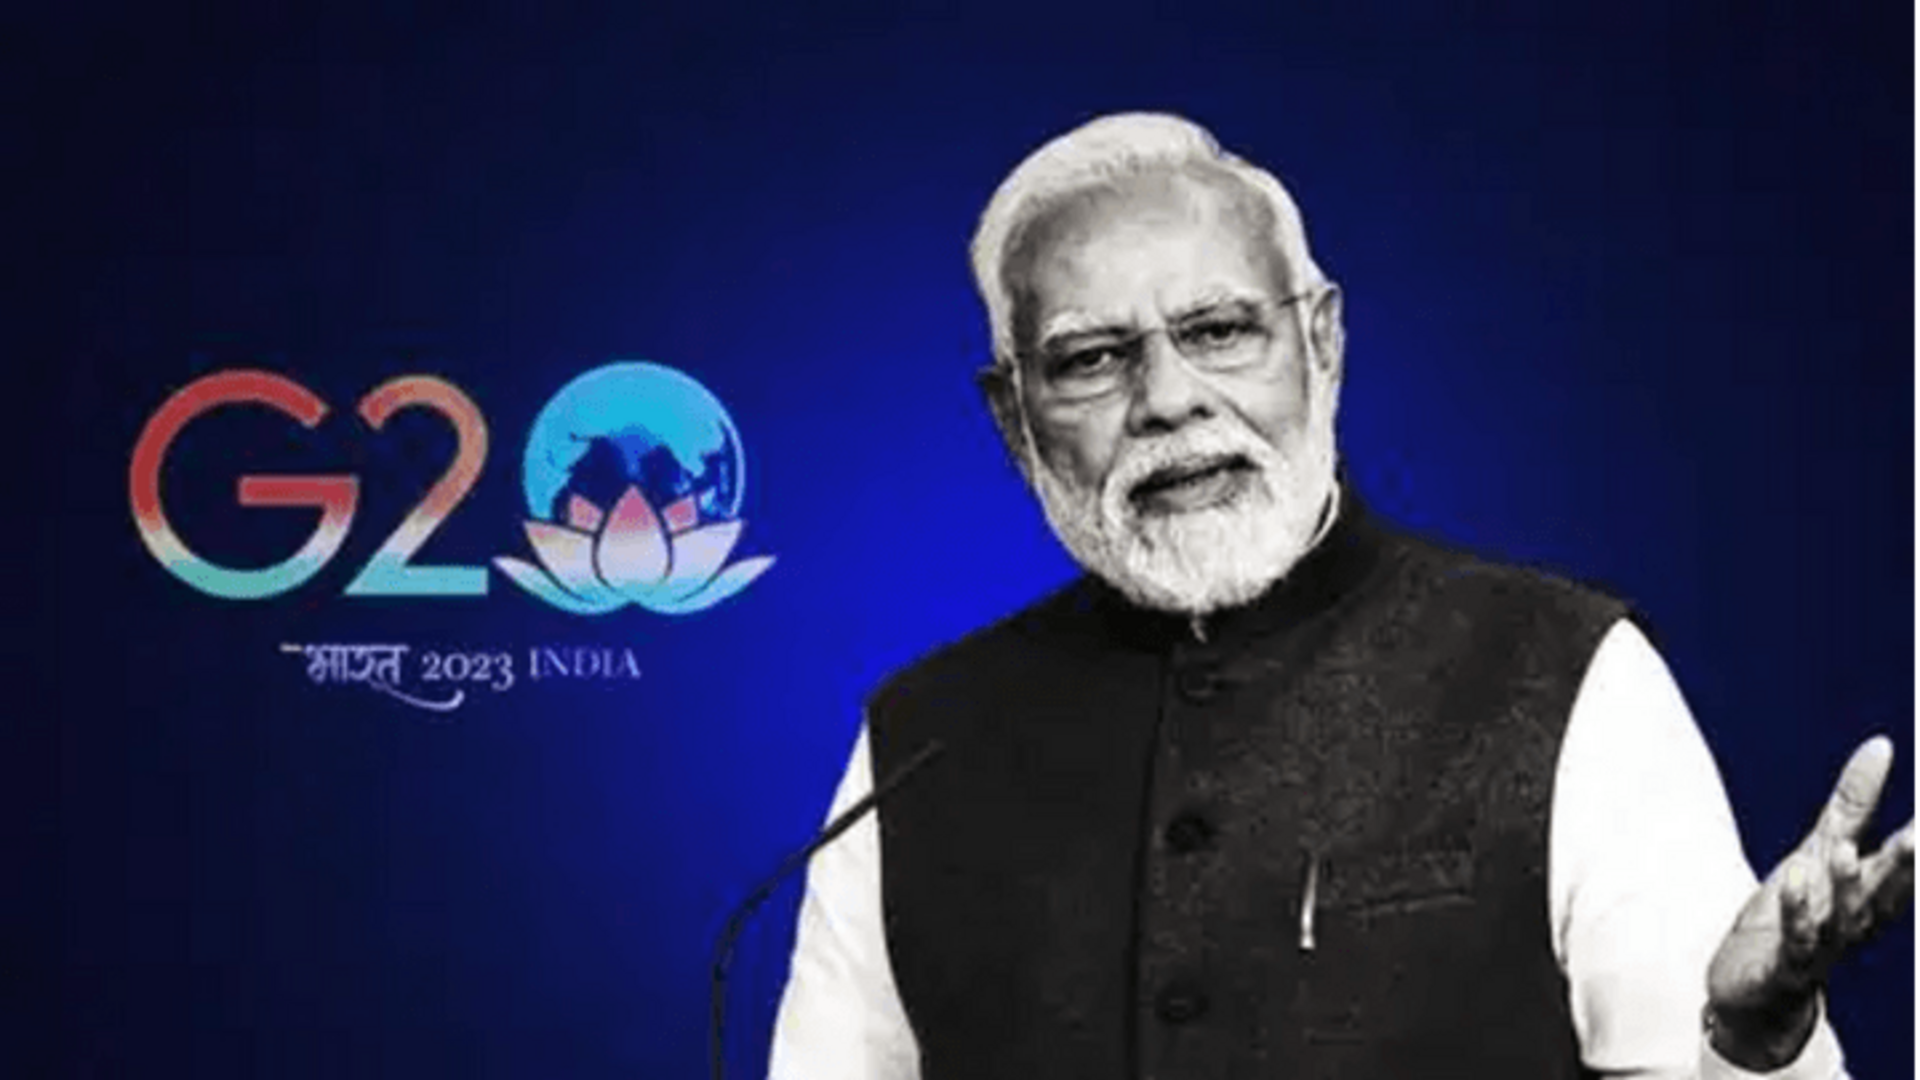 G20 Delhi Declaration: దిల్లీ డిక్లరేషన్‌ను ఆమోదించిన జీ20 దేశాధినేతలు: ప్రధాని మోదీ ప్రకటన 